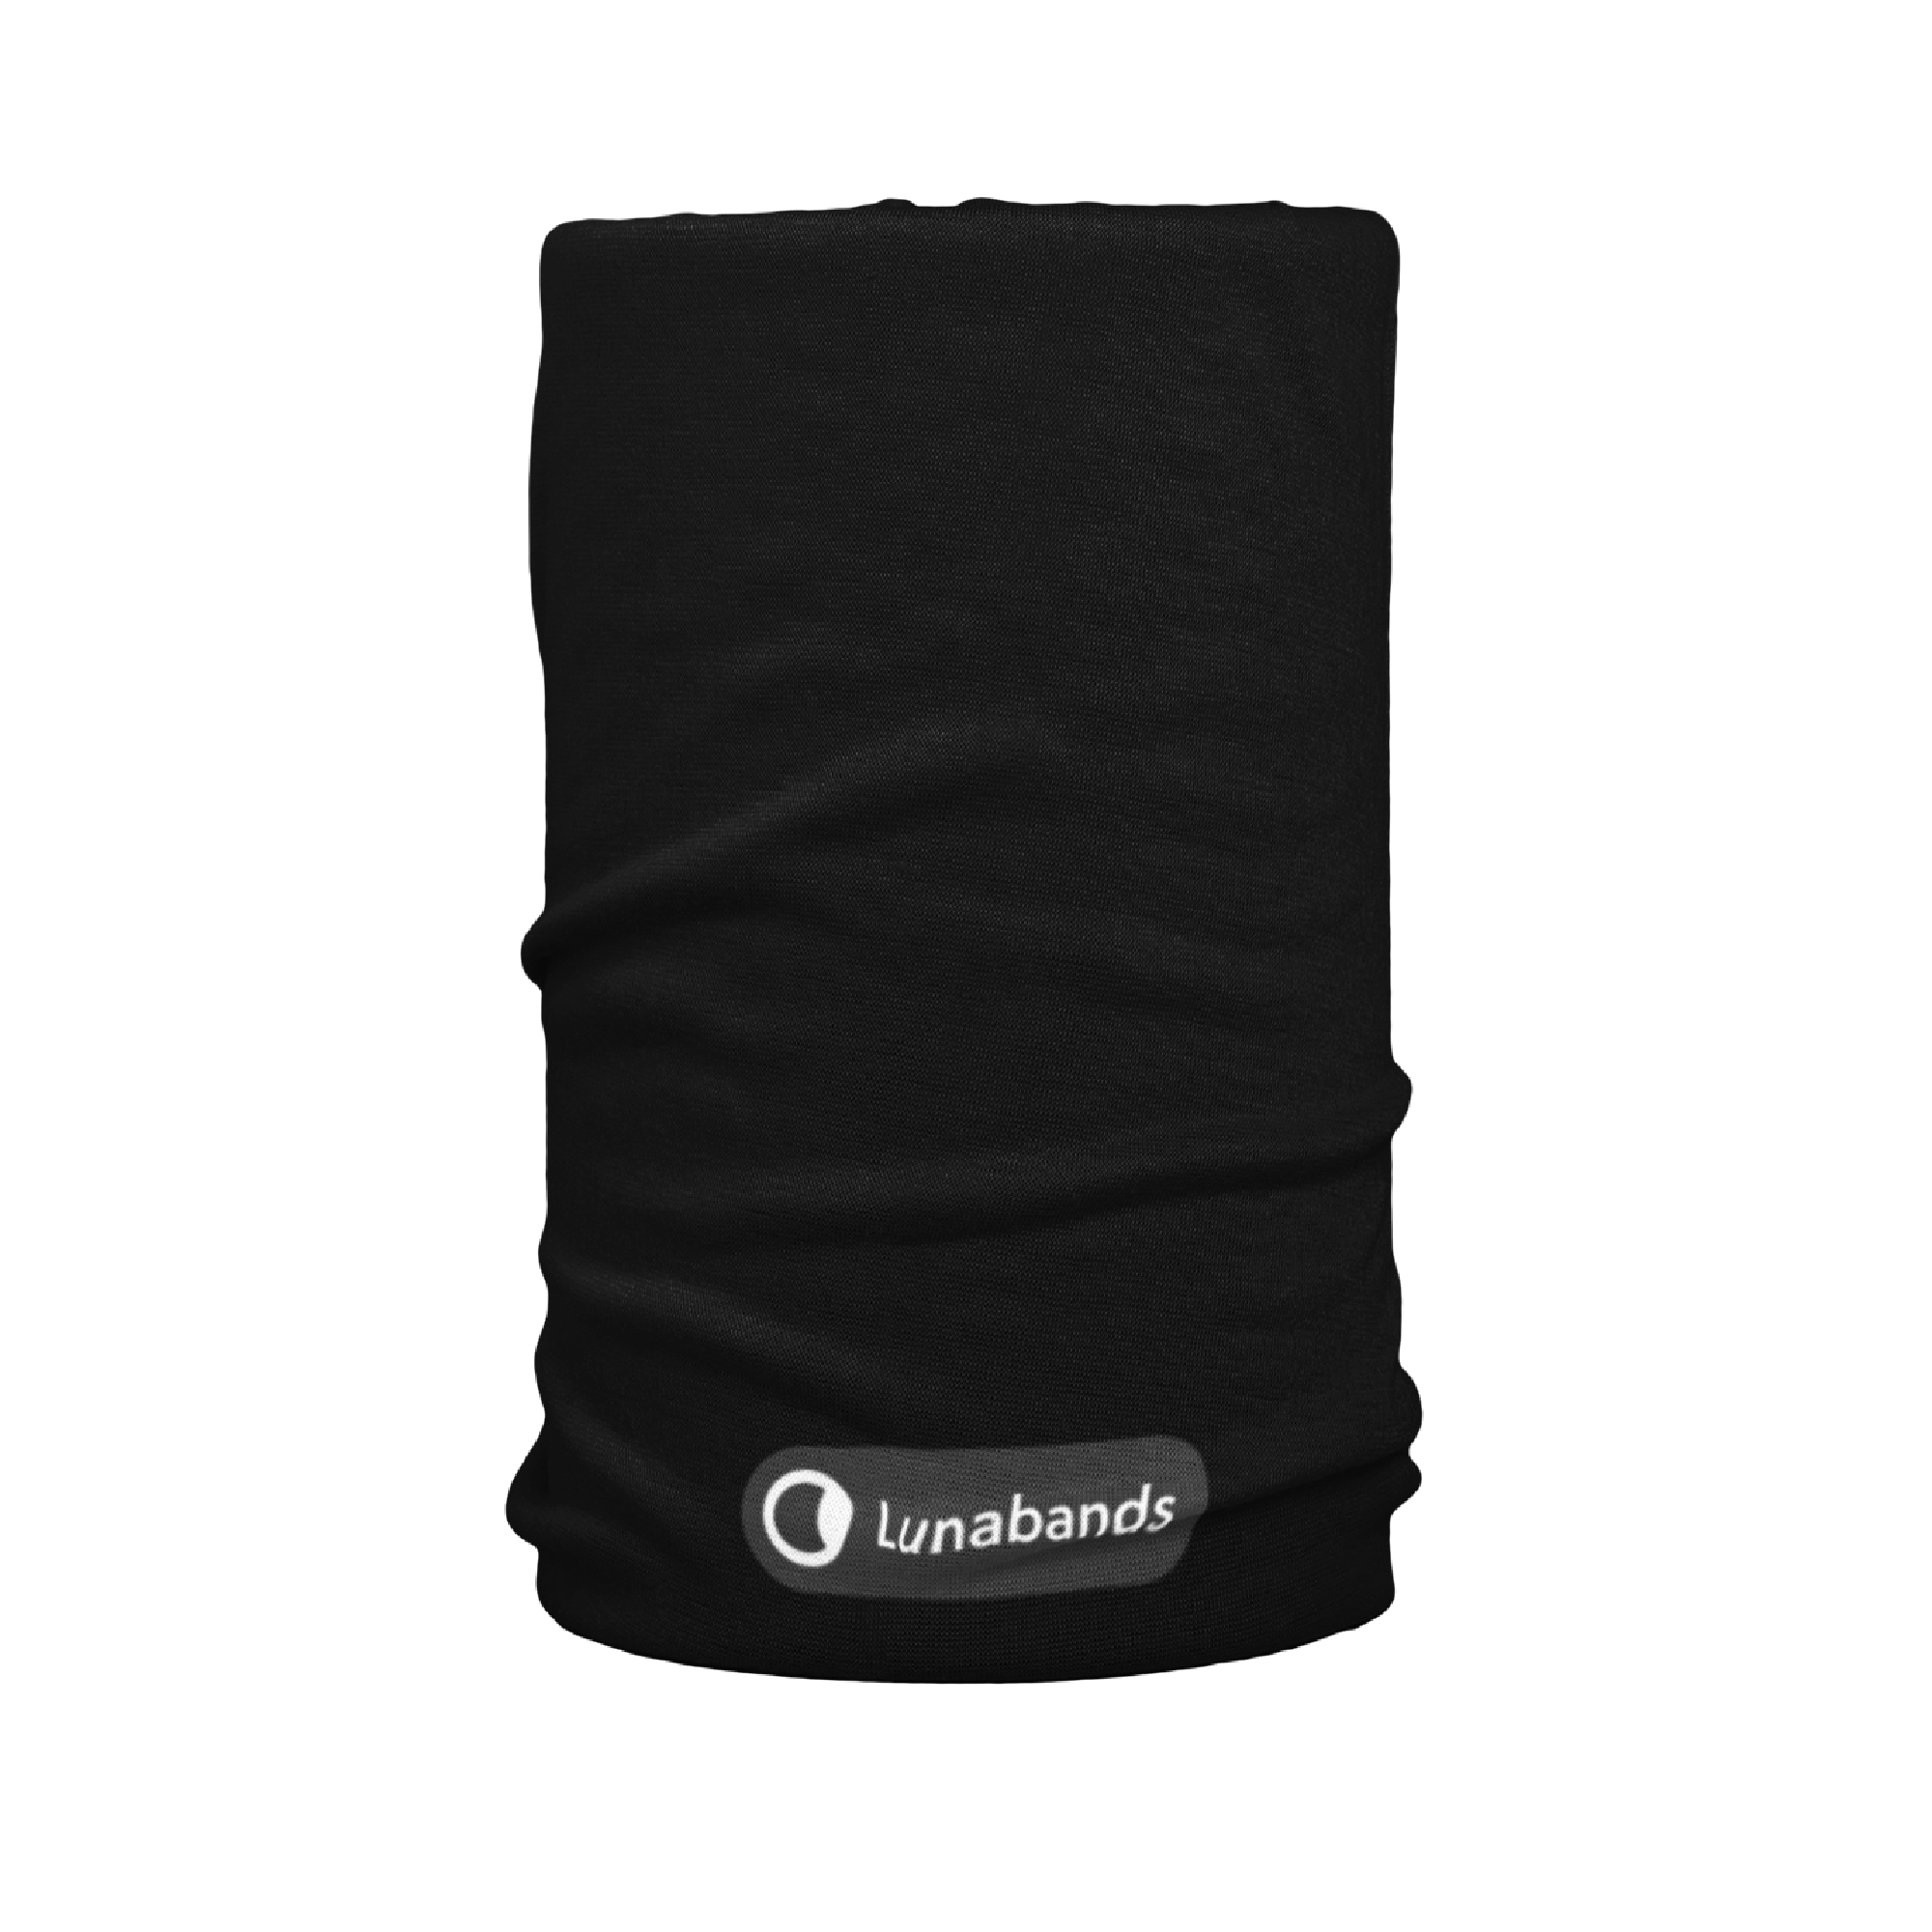 Lunabands Designer Black Block colour Multi Use Multifunctional Running Sports Fitness Yoga Gym Bandana Headband Headbands